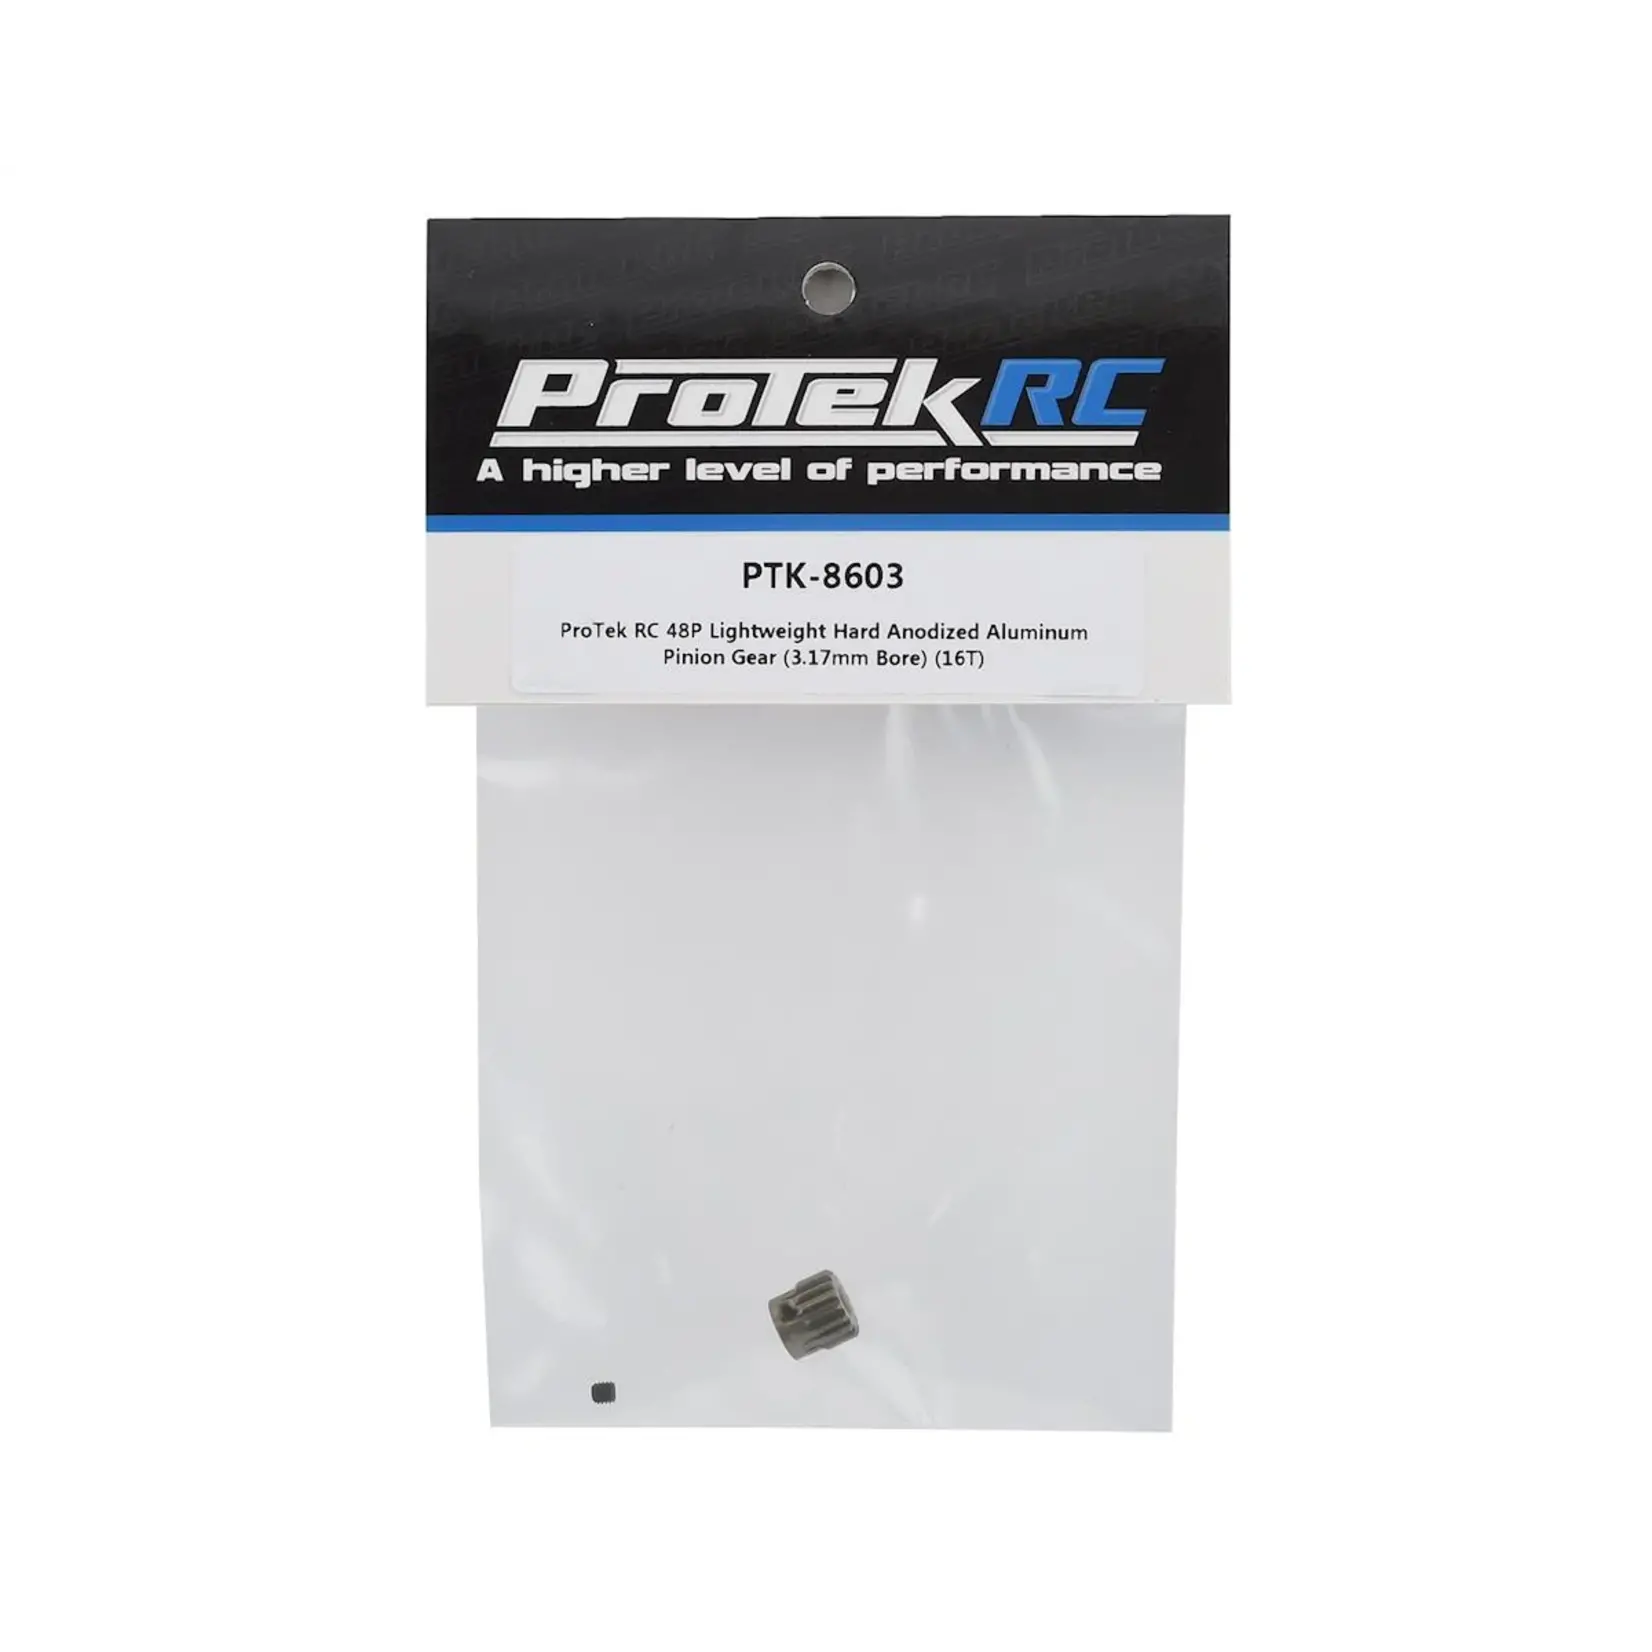 ProTek RC ProTek RC 48P Lightweight Hard Anodized Aluminum Pinion Gear (3.17mm Bore) (16T) #PTK-8603